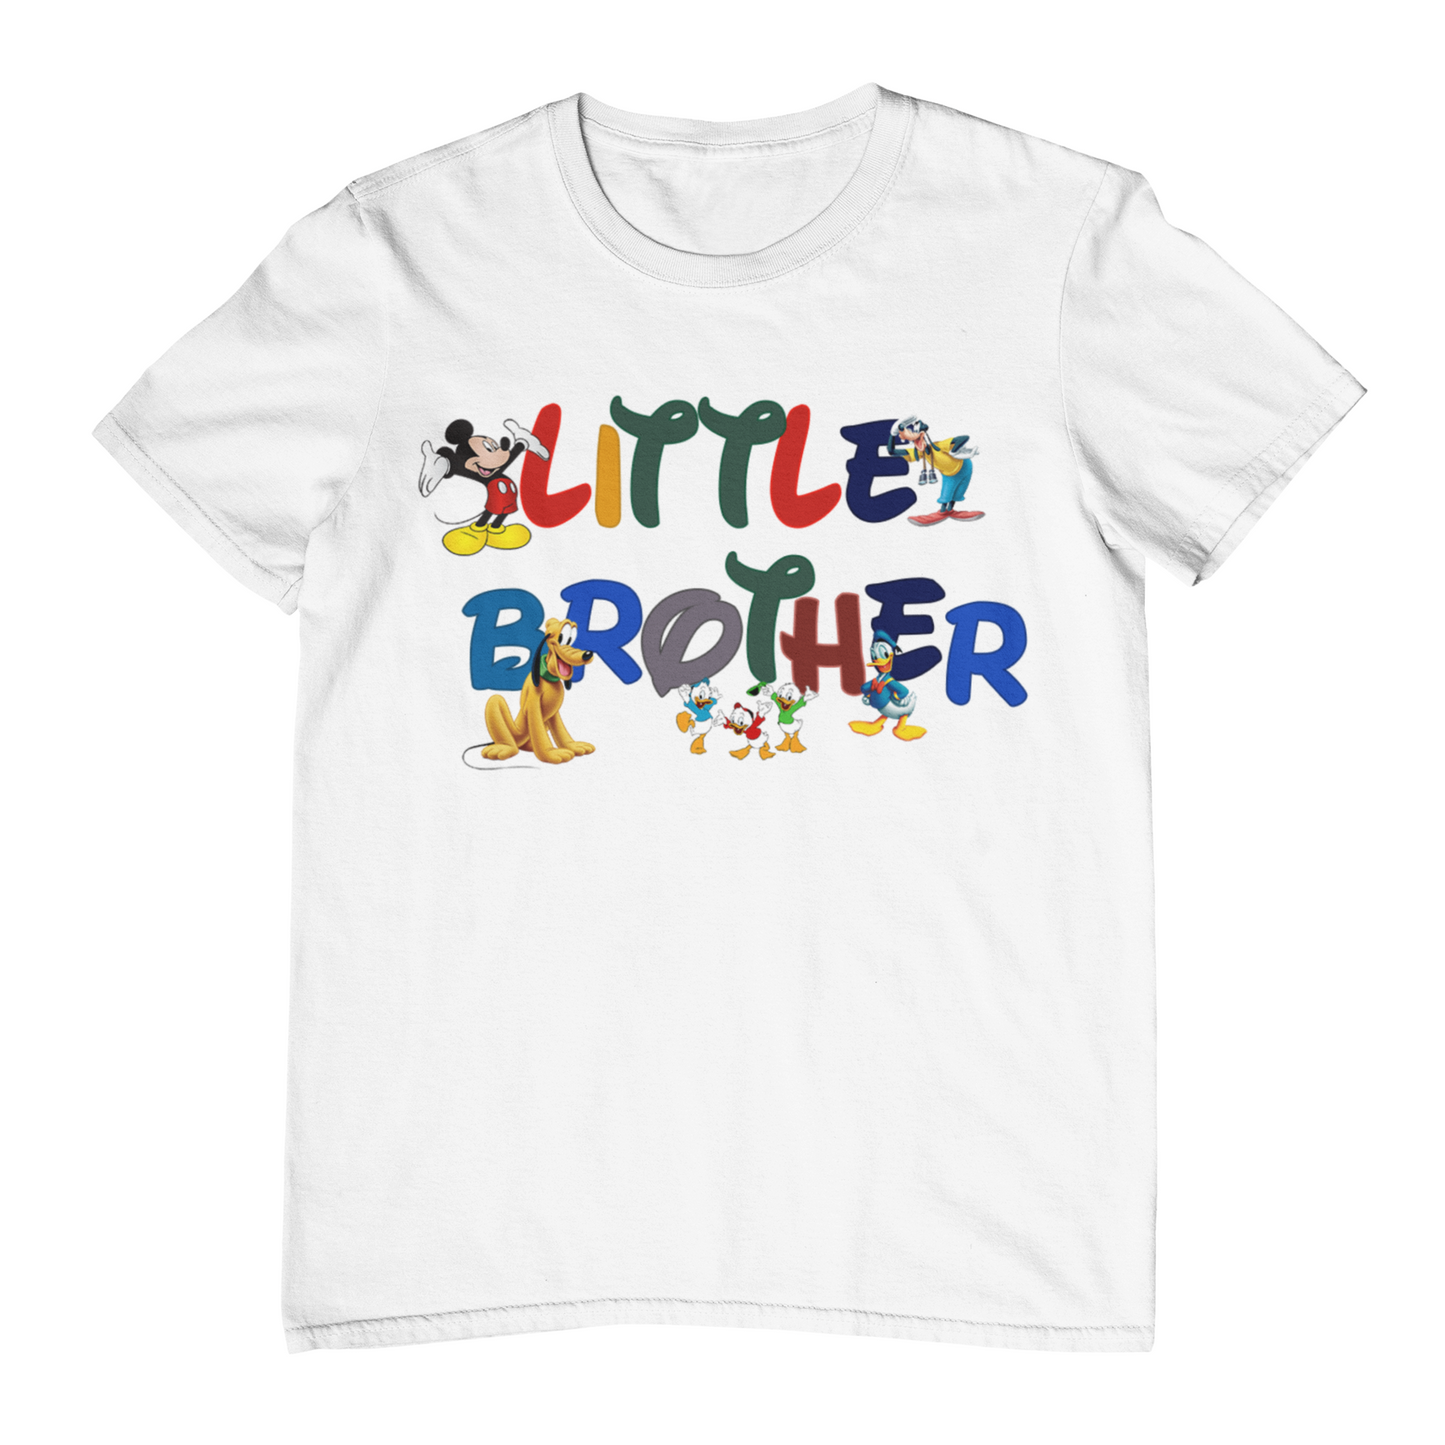 Brother Mickey shirt  | Mickey and friends shirts |  Little Brother boys shirt | Boys brother Mickey shirt | Boys shirts